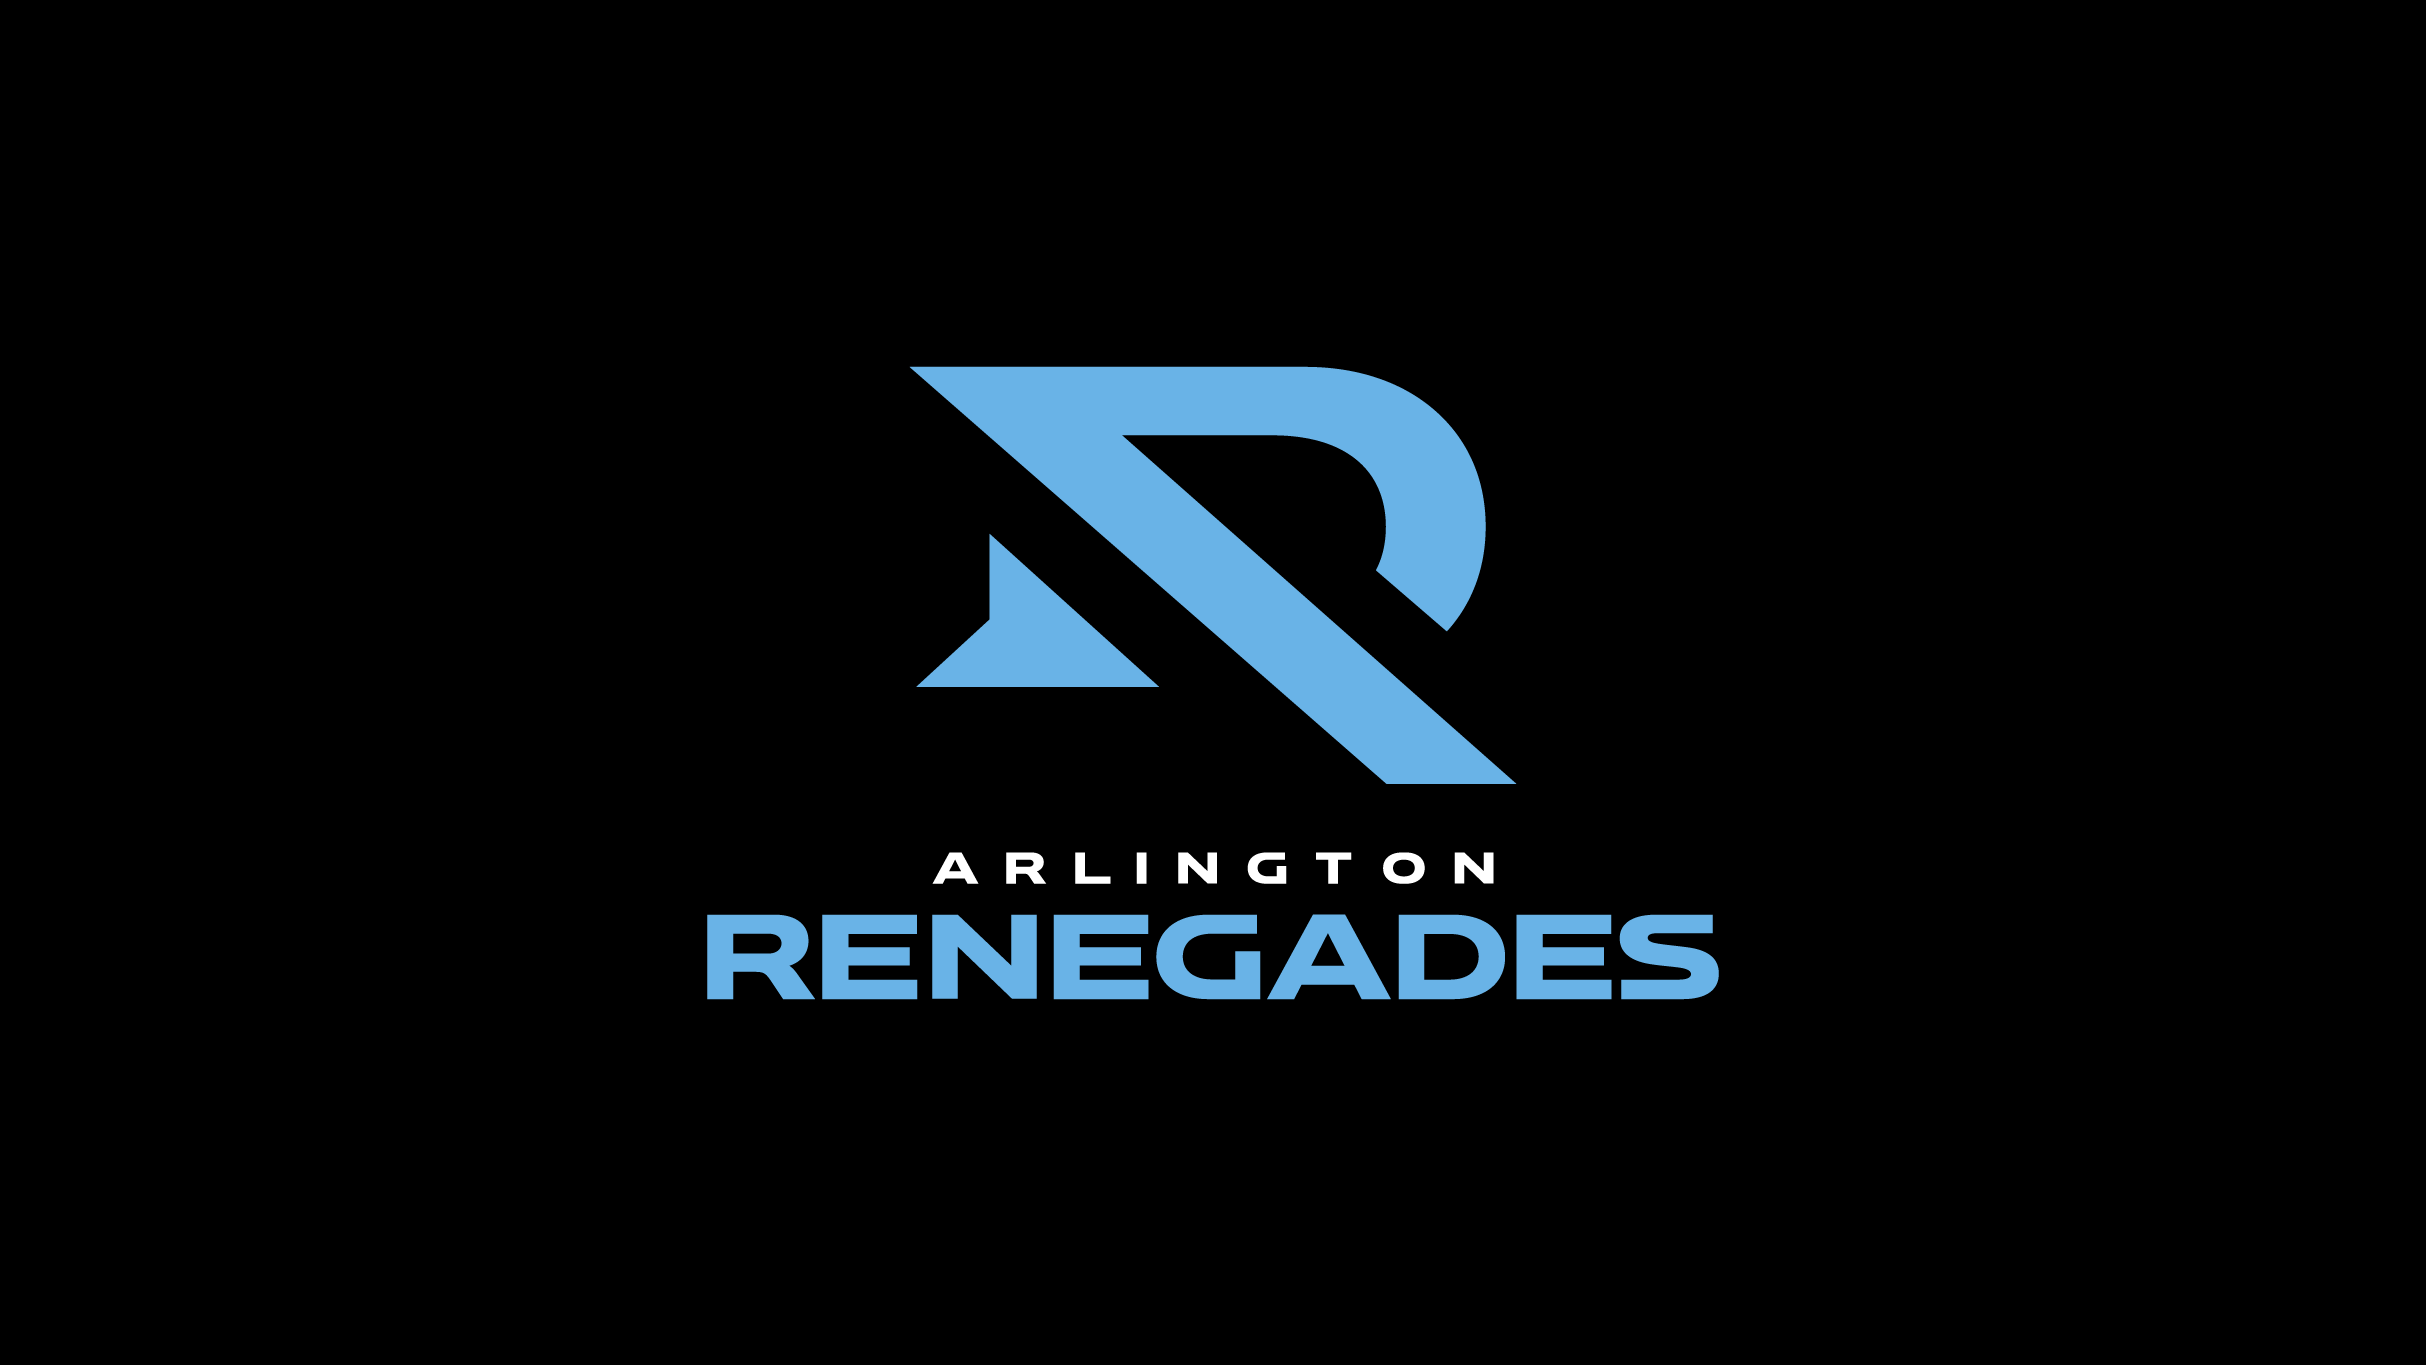 Arlington Renegades vs. St. Louis Battlehawks